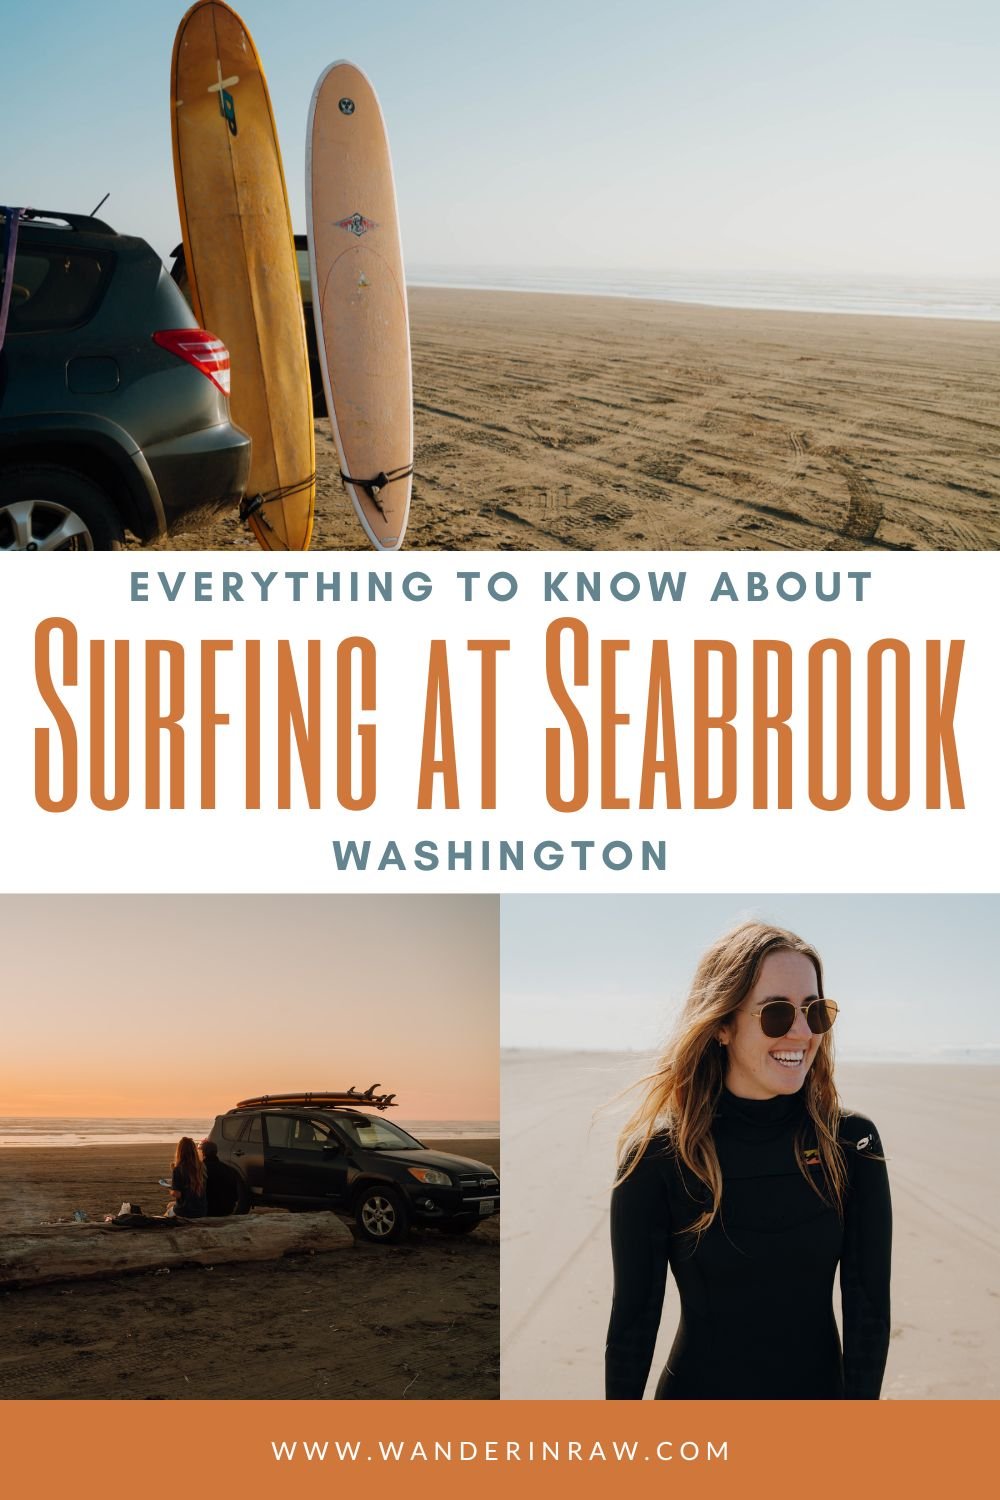 Surfing in Washington: Seabrook